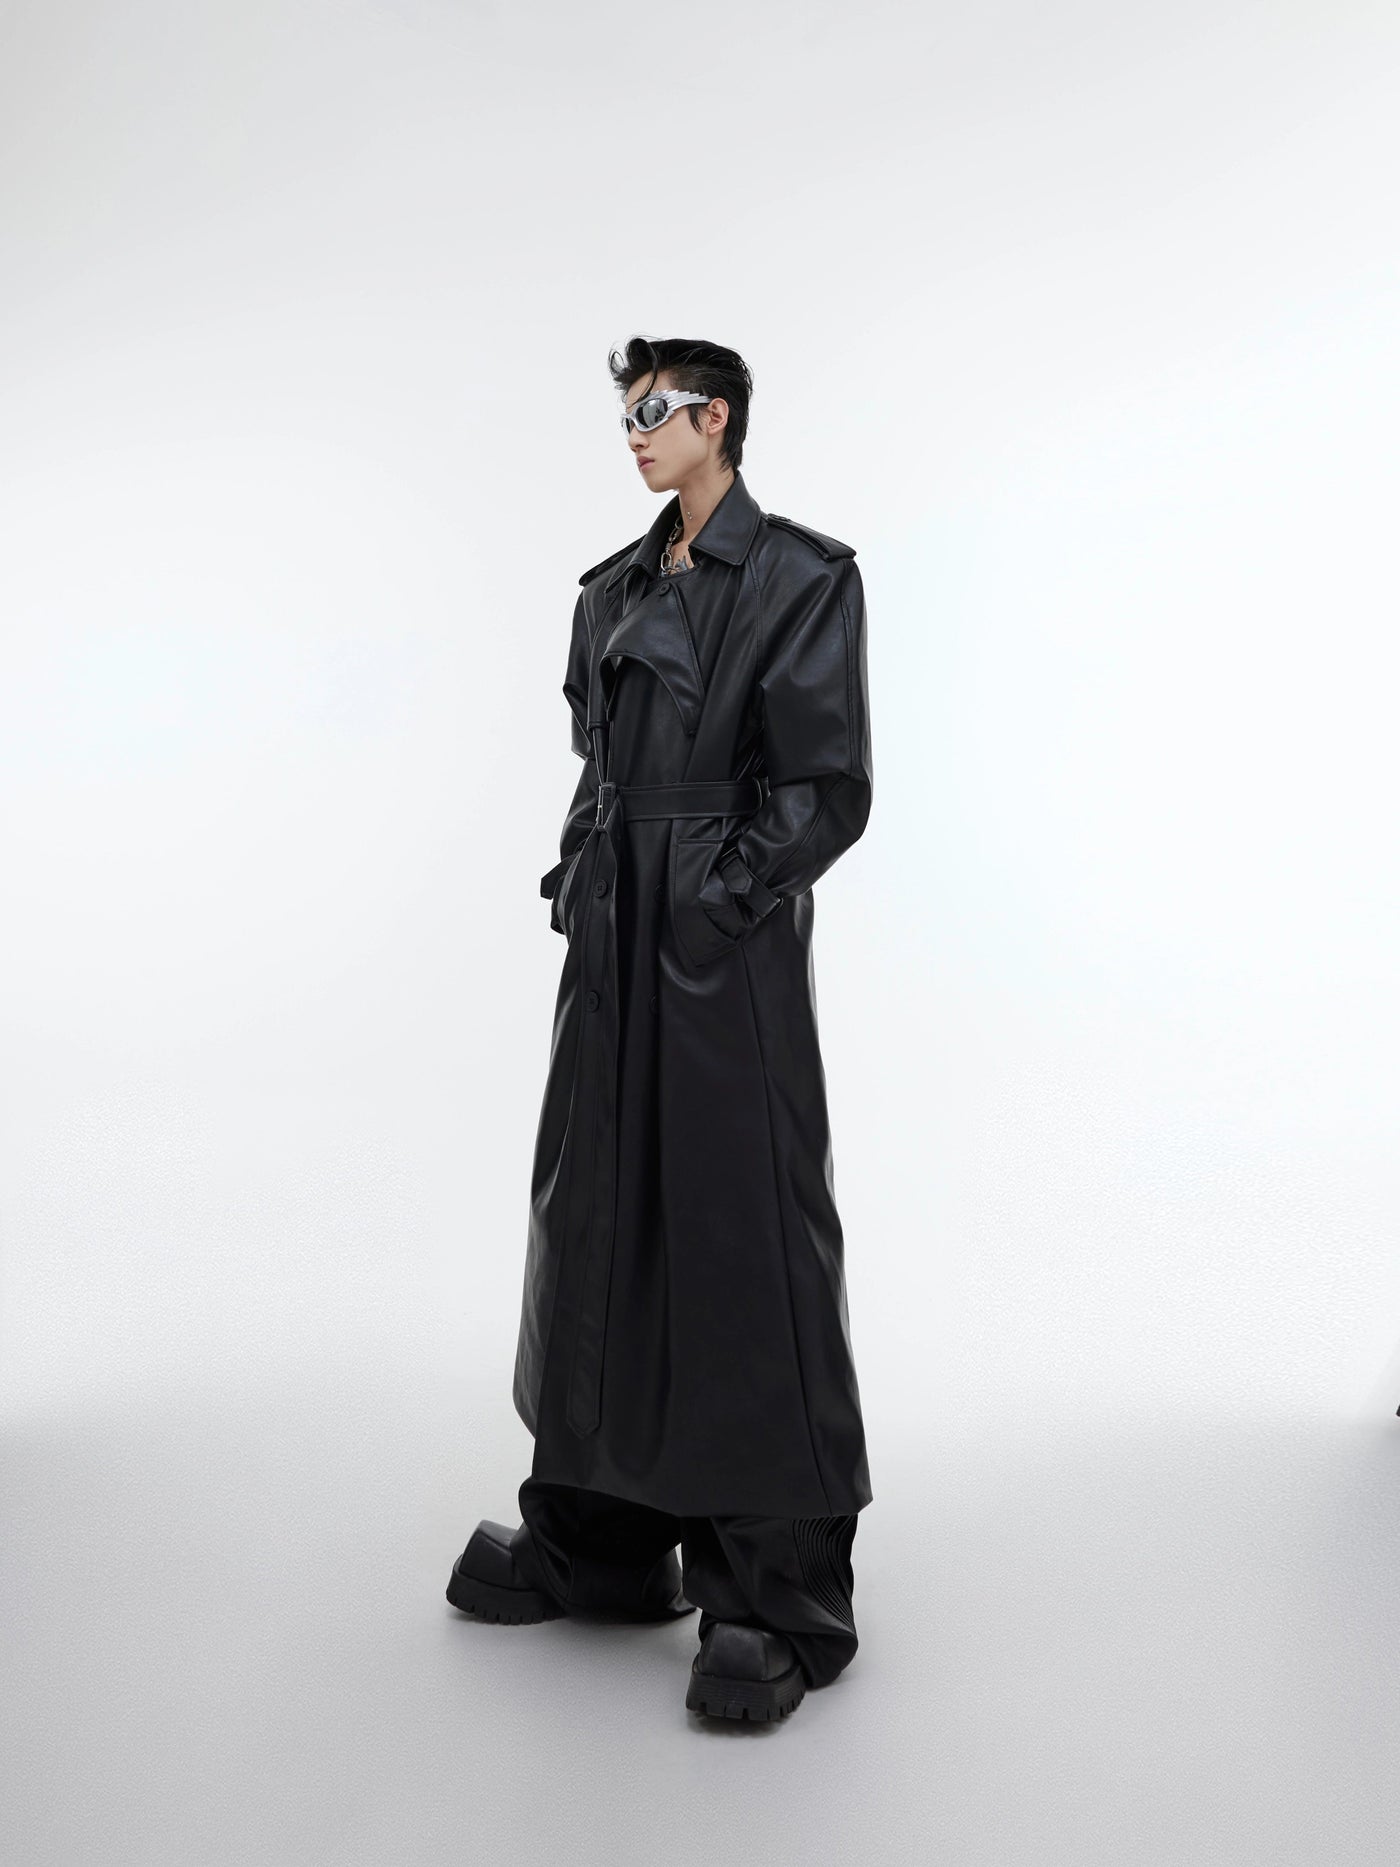 Strap PU Leather Long Coat Korean Street Fashion Long Coat By Argue Culture Shop Online at OH Vault